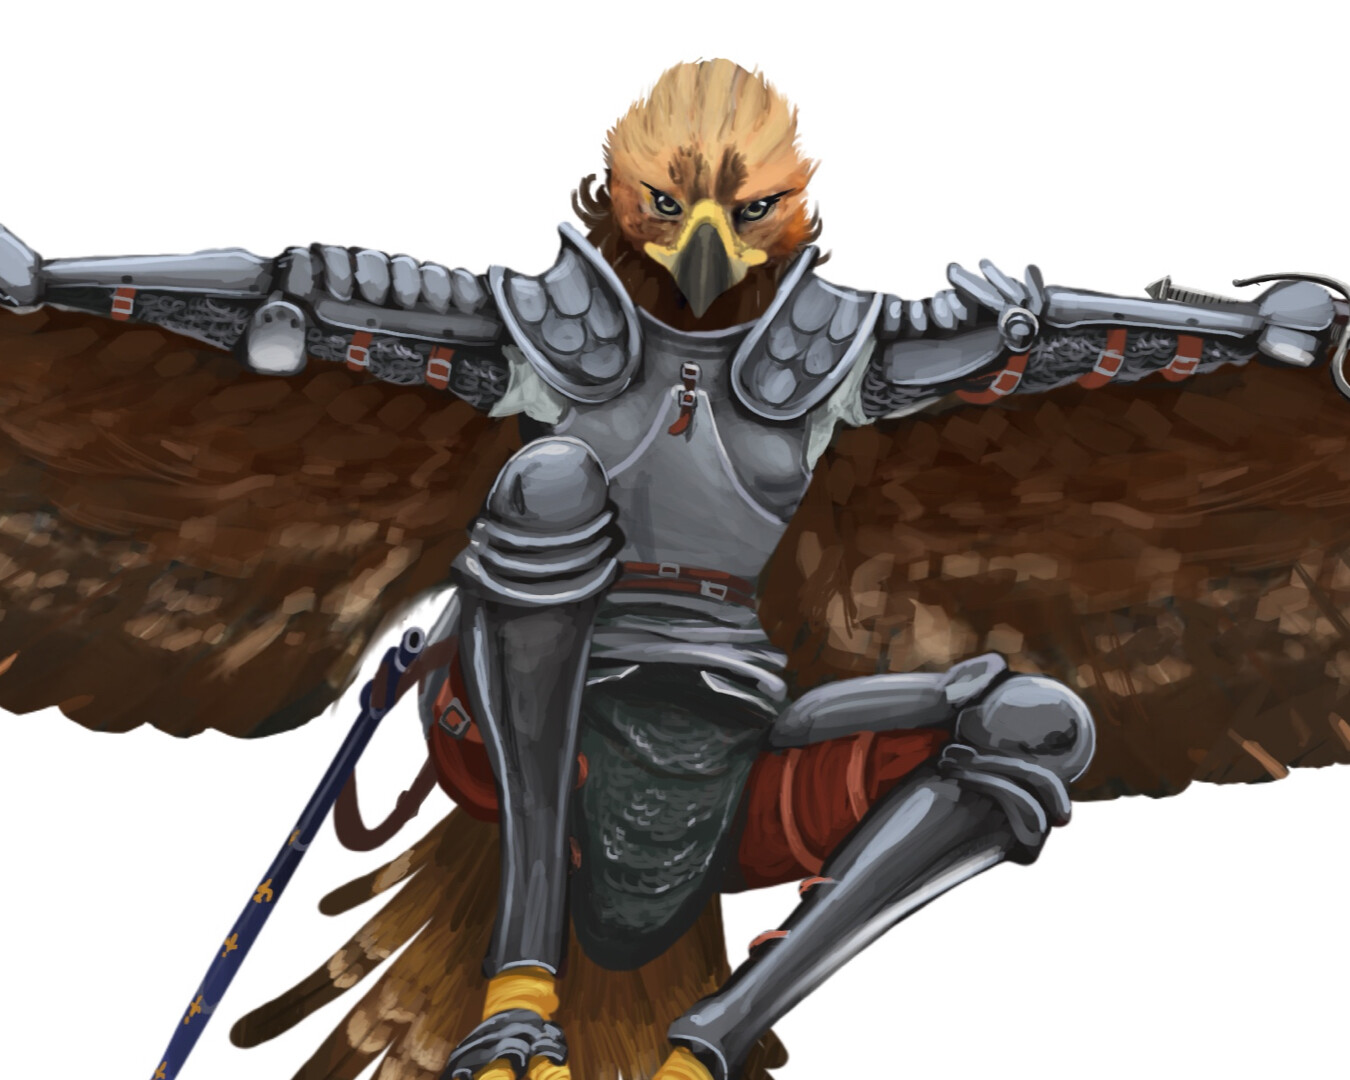 Jean the Golden Eagle detail